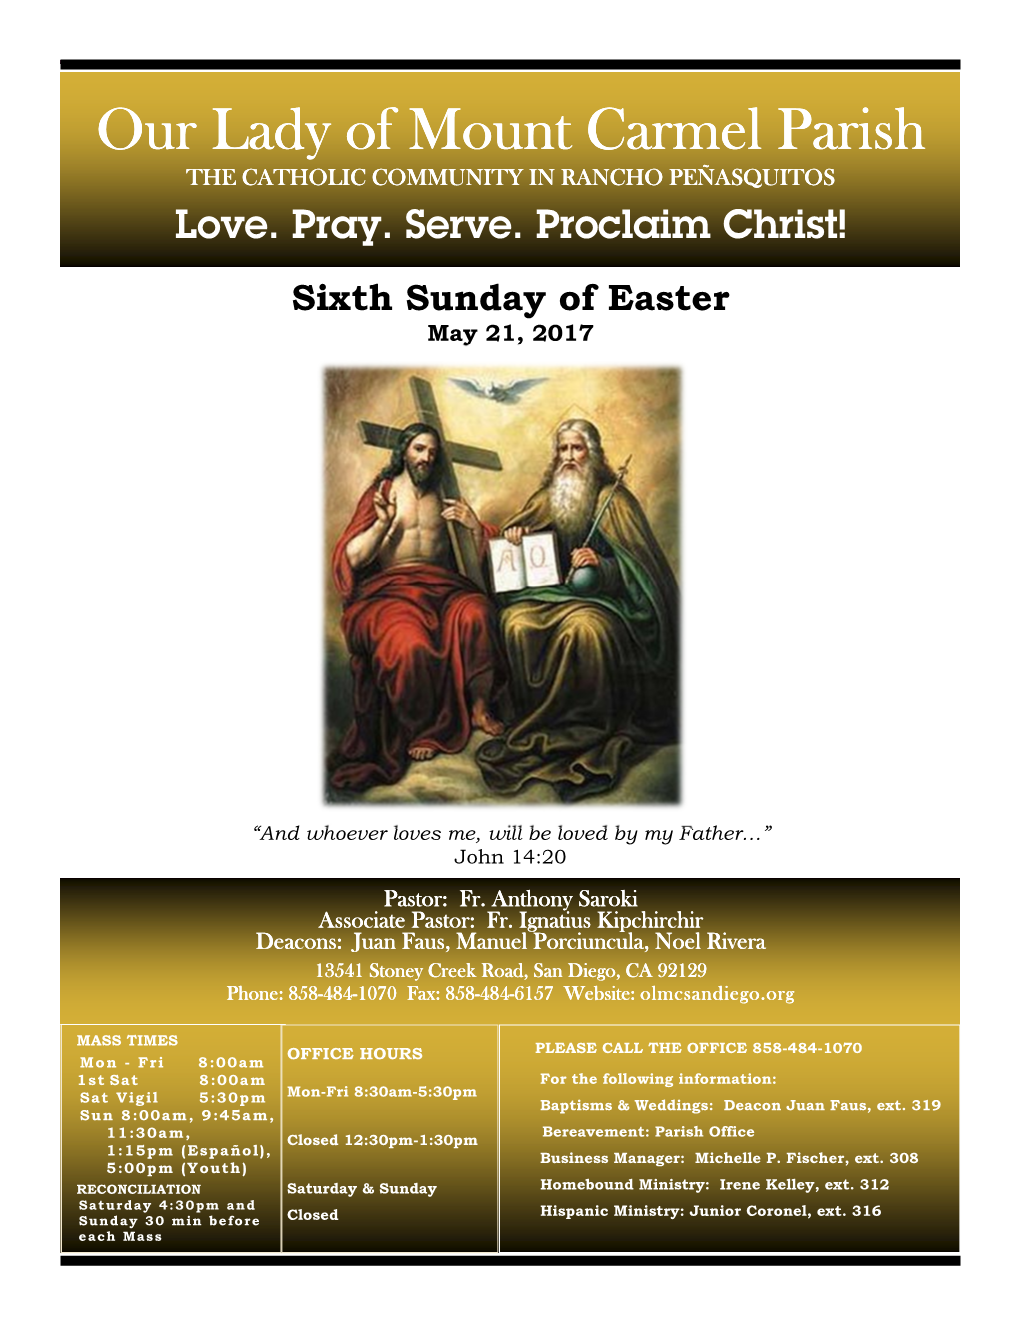 CATHOLIC EDUCATION Fatima Prayer Group Lorna Cruz (858) 240-6007 Cruzergl@Gmail.Com